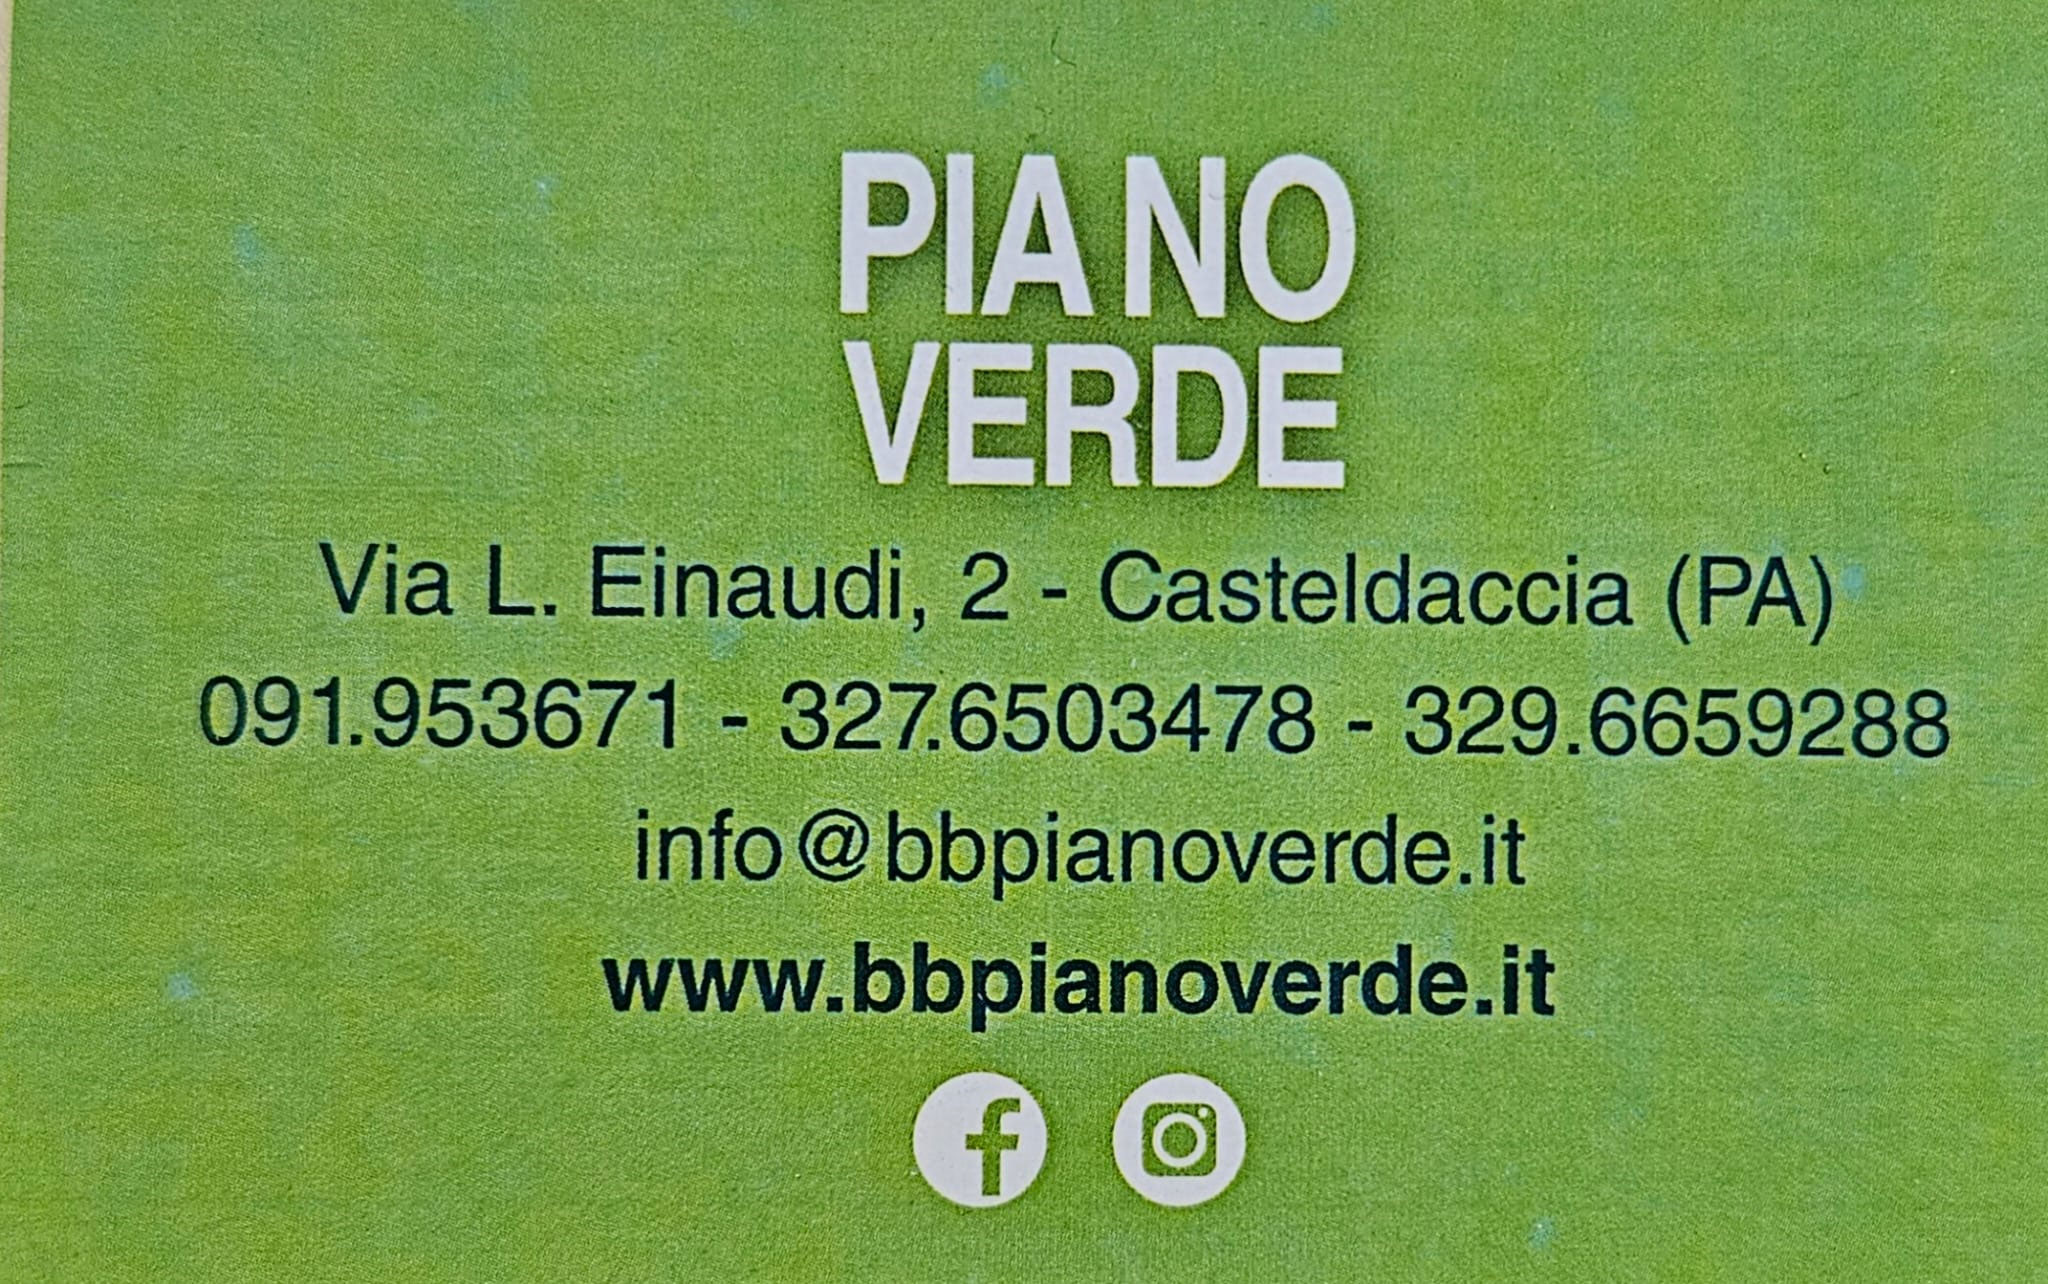 Piano Verde